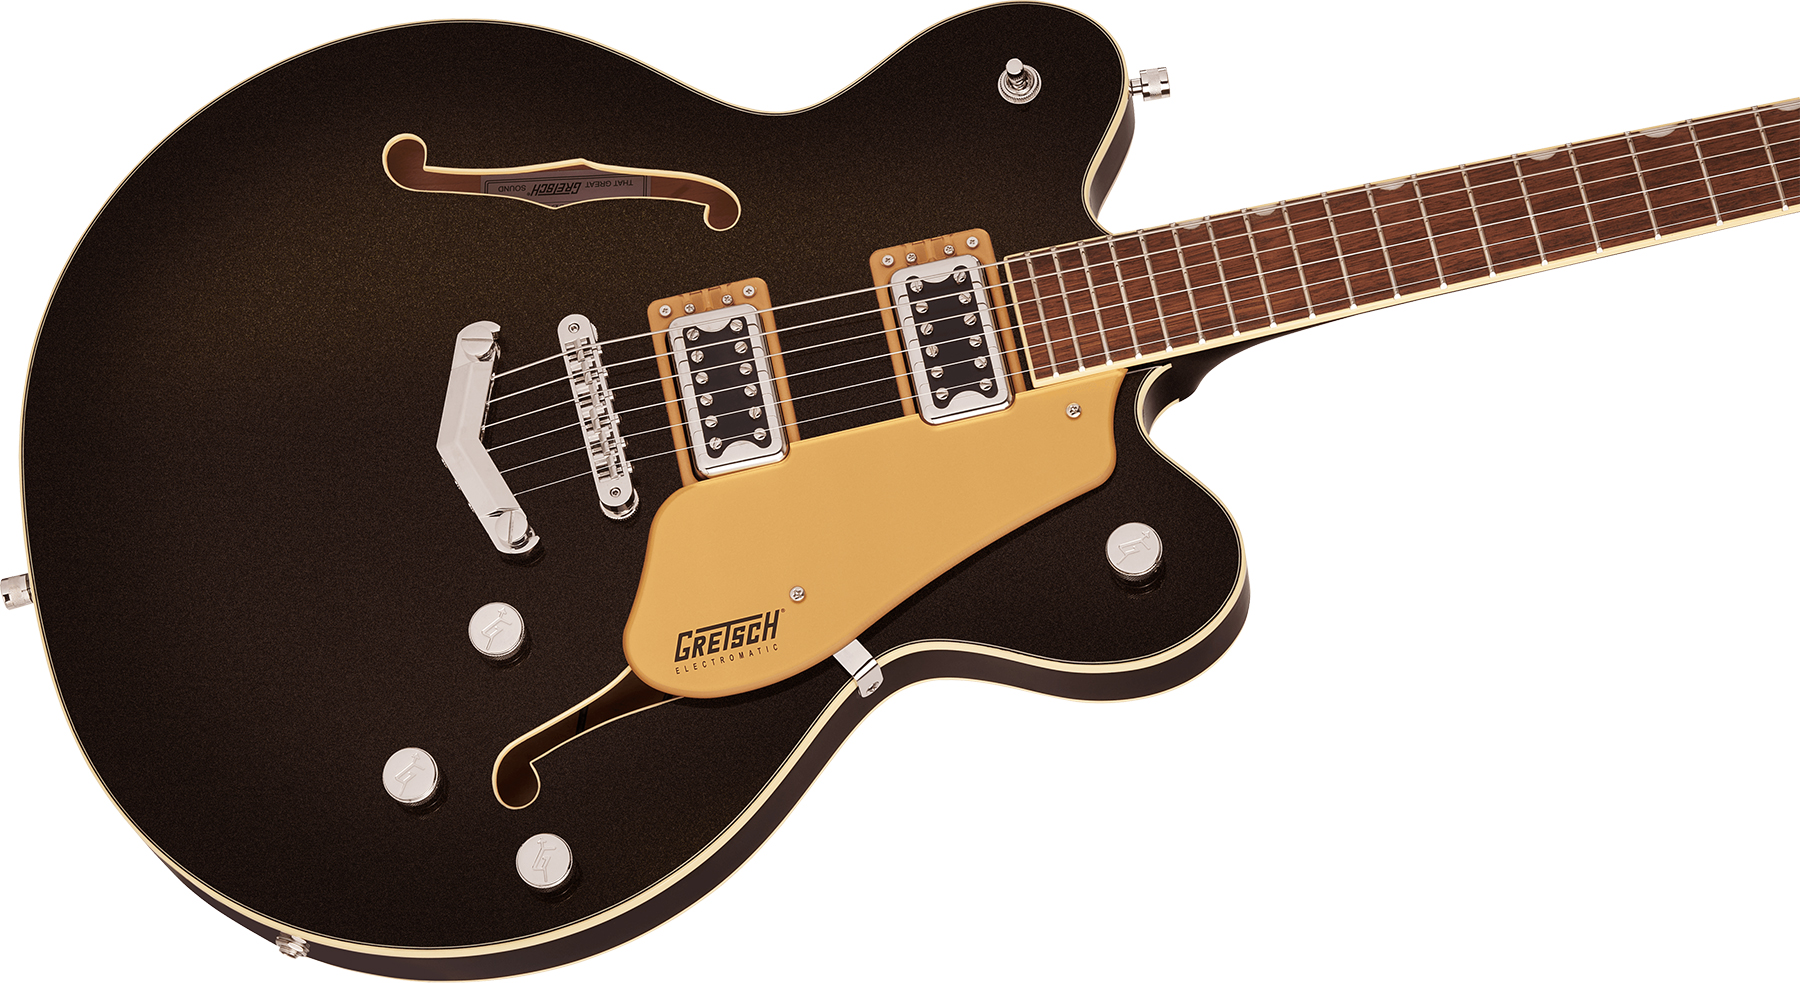 Gretsch G5622 Center Bloc Double Cut V-stoptail Electromatic Hh Ht Lau - Black Gold - Semi hollow elektriche gitaar - Variation 2